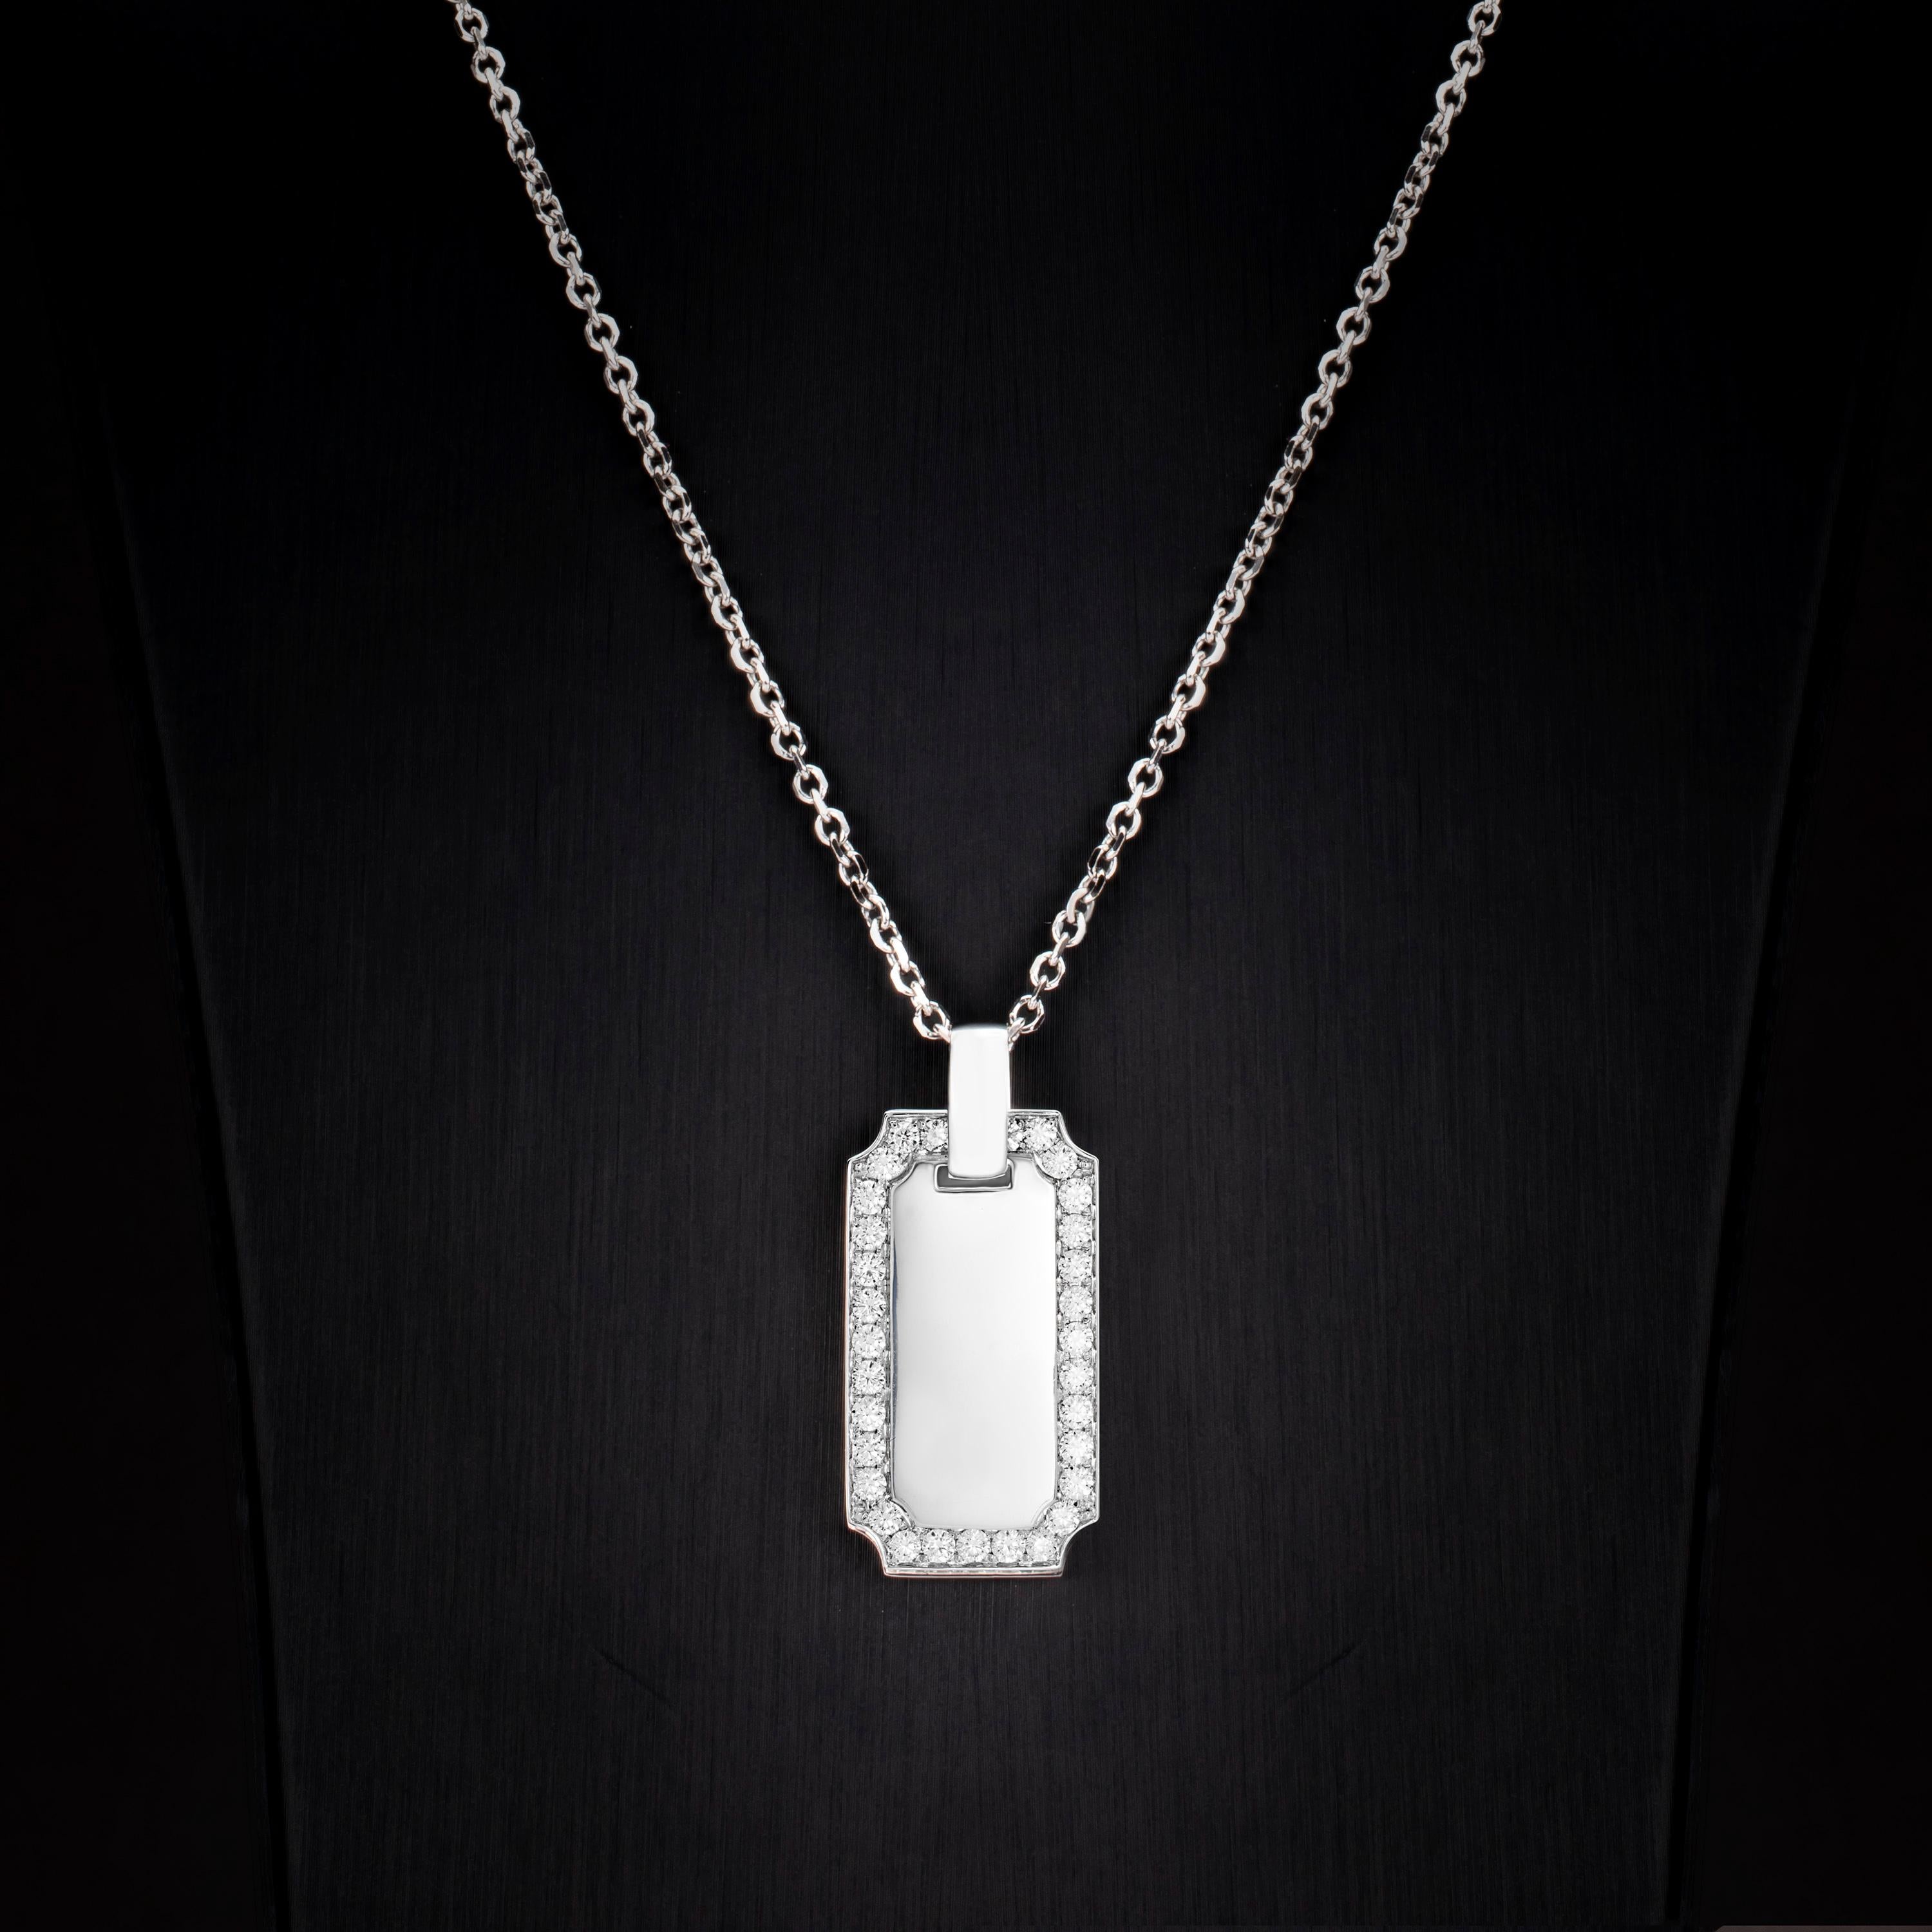 Round Cut 1.34 Carat Diamond 18 Karat Solid White Gold I.D. Tag Pendant Necklace For Sale